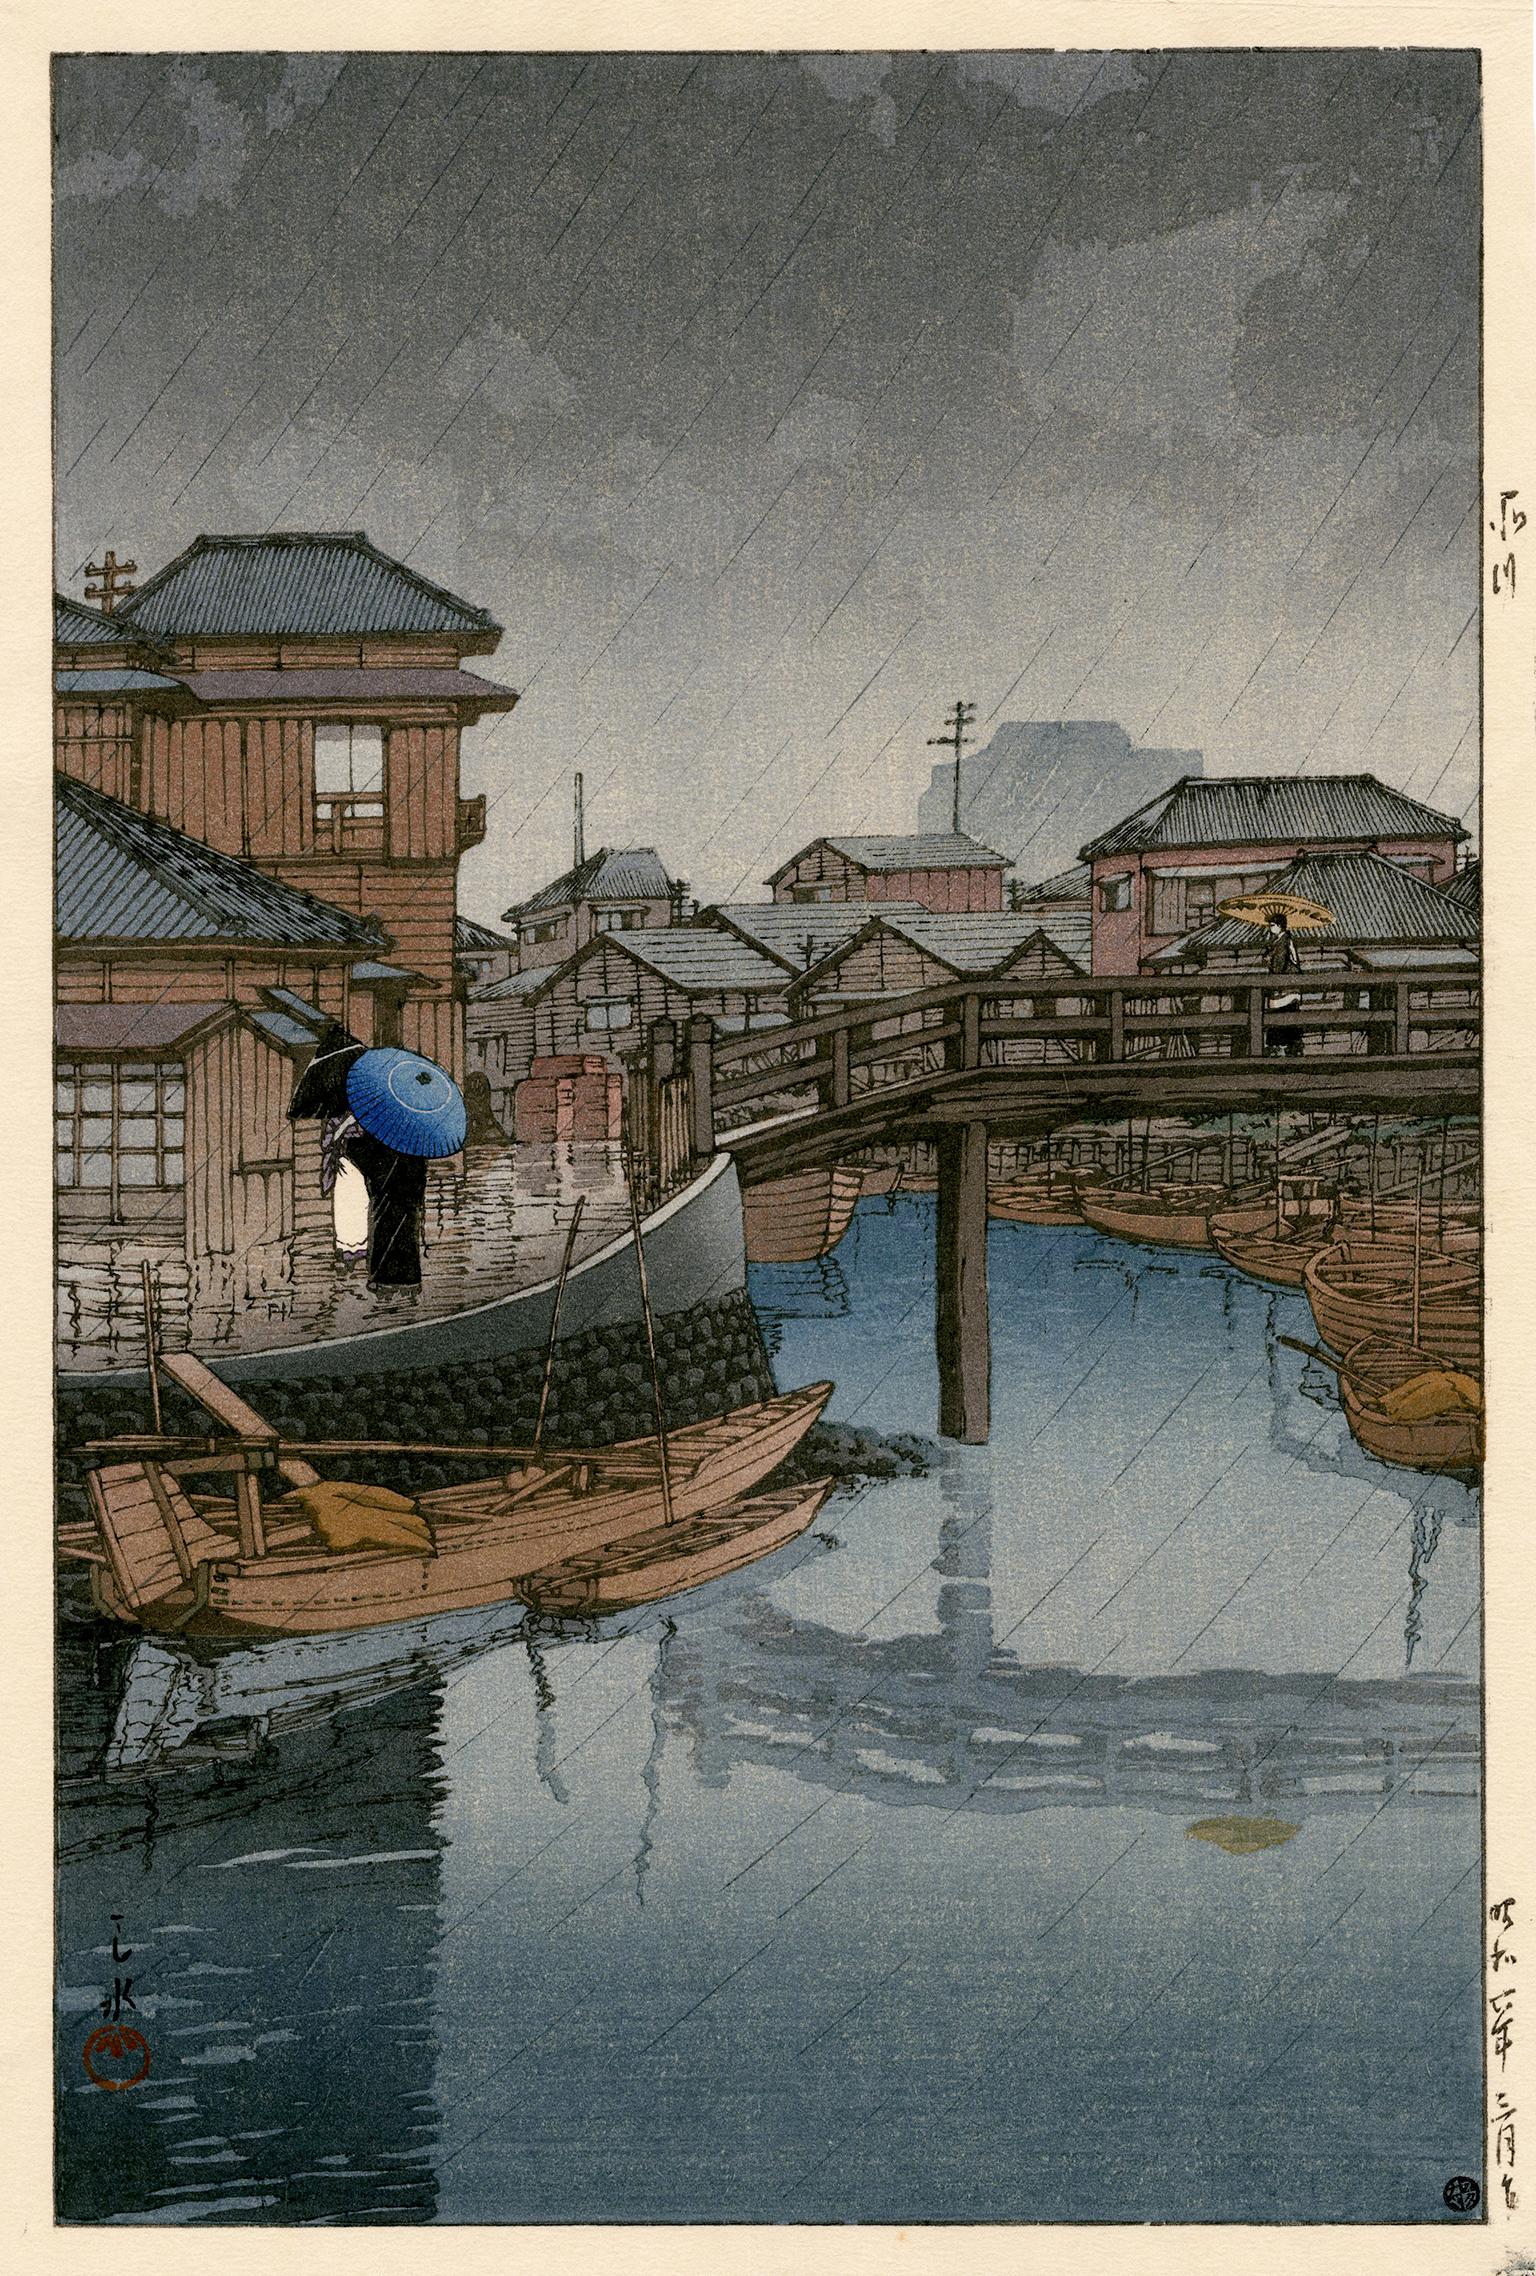 Kawase Hasui Figurative Print - 'Rain at Shinagawa, Ryoshimachi' — lifetime impression